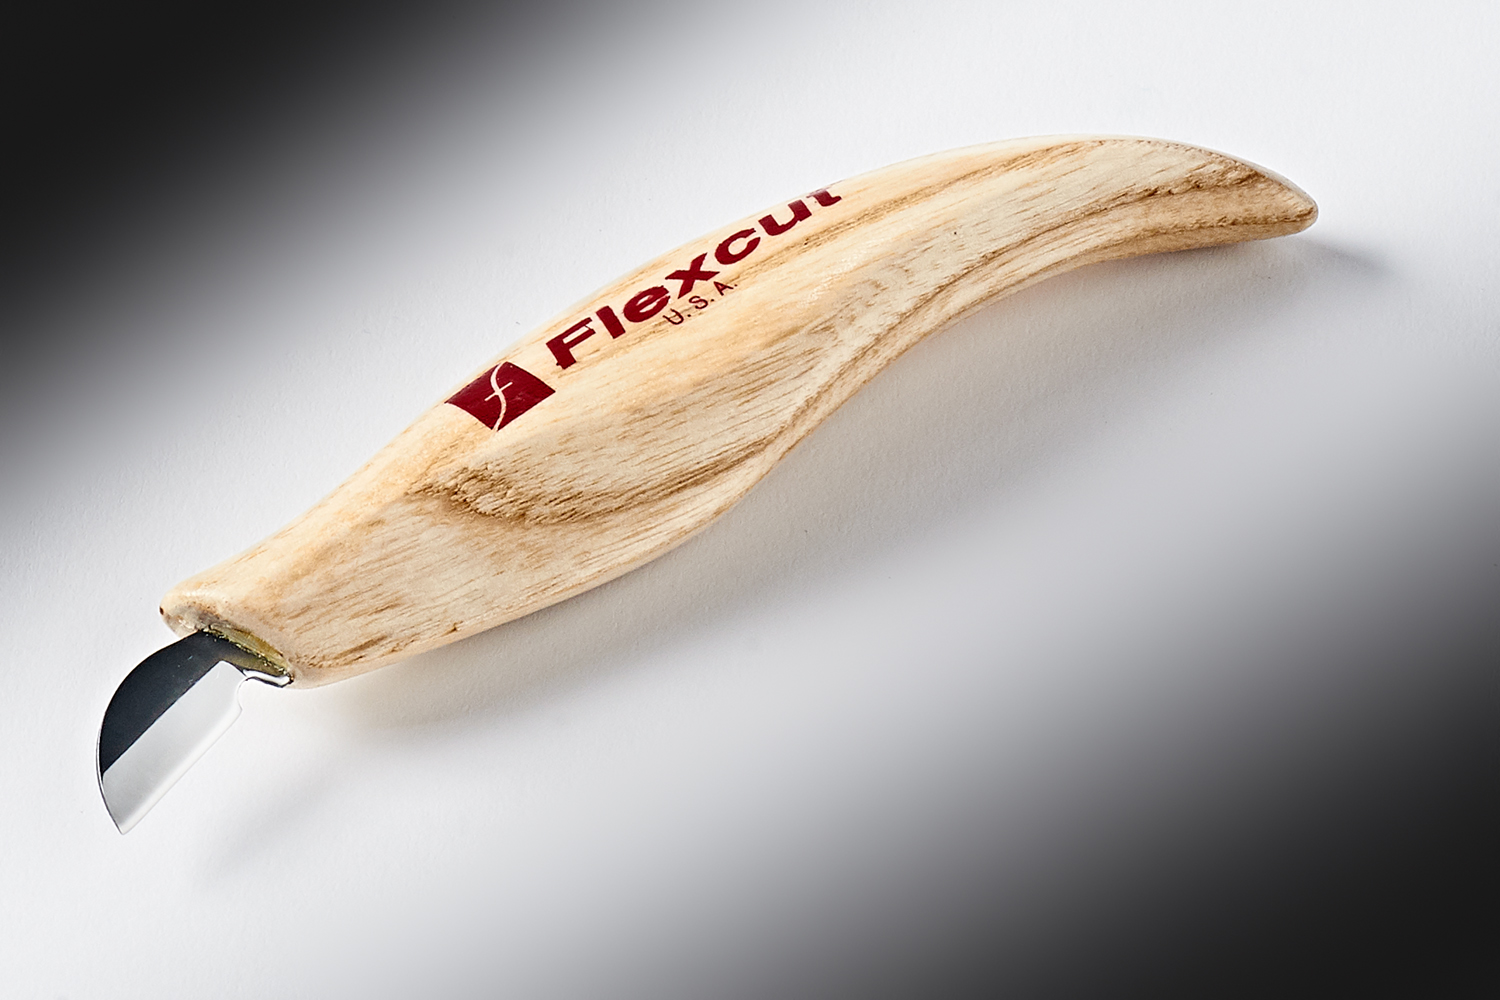 Flexcut KN20 Mini-Chip Carving Knife - Blade HQ